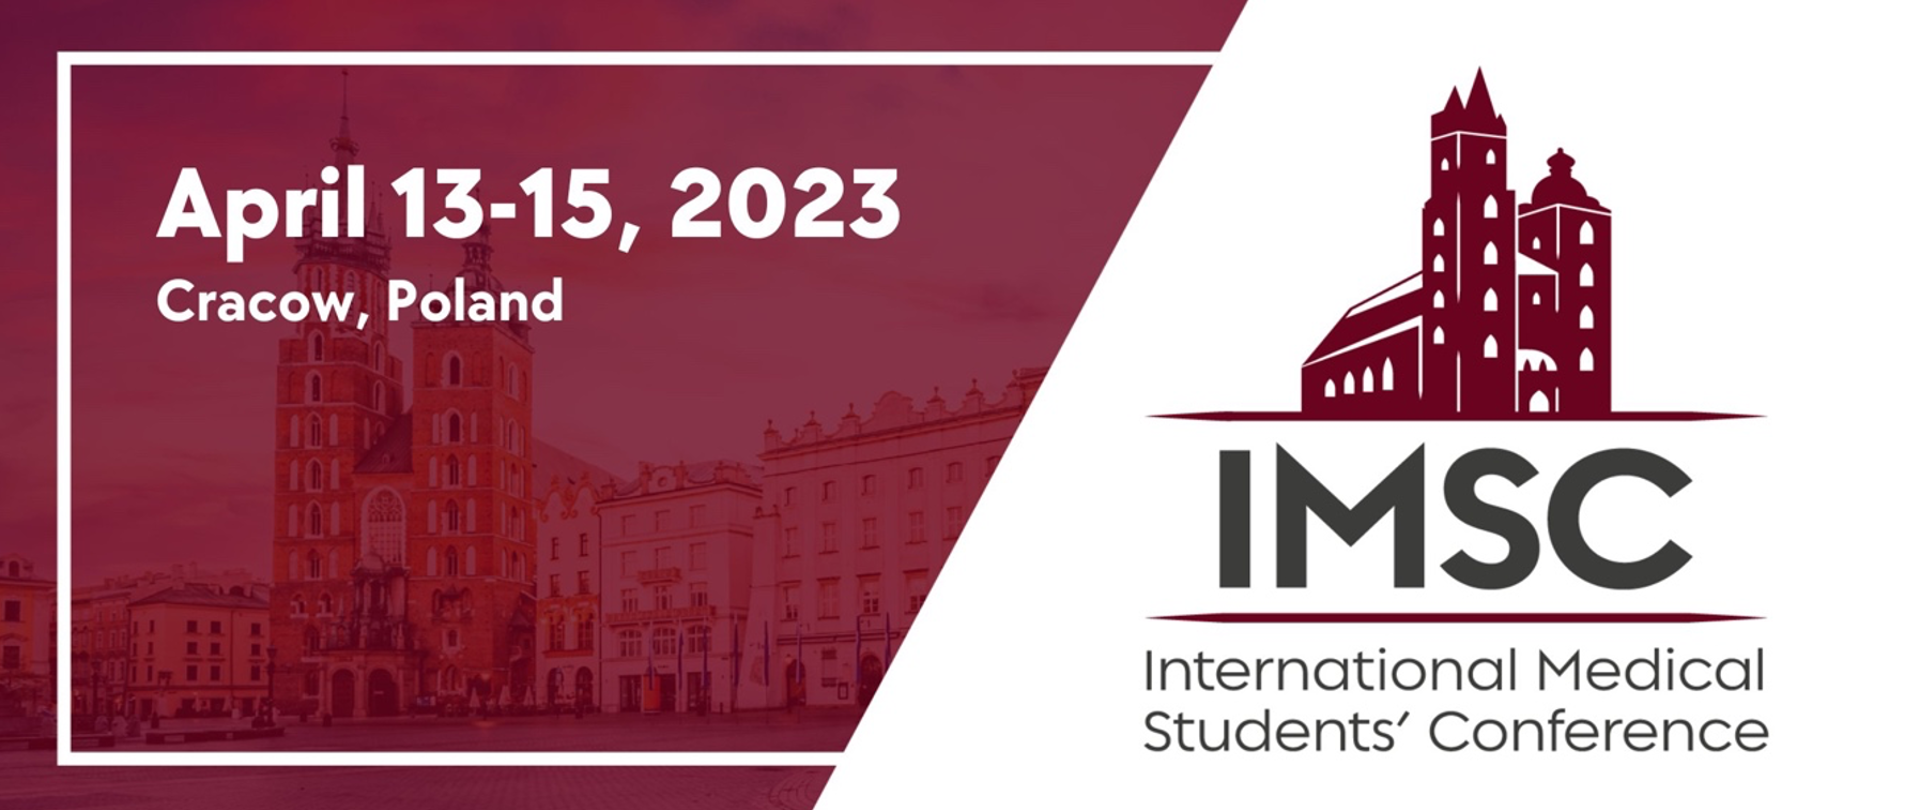 International Medical Students' Conference